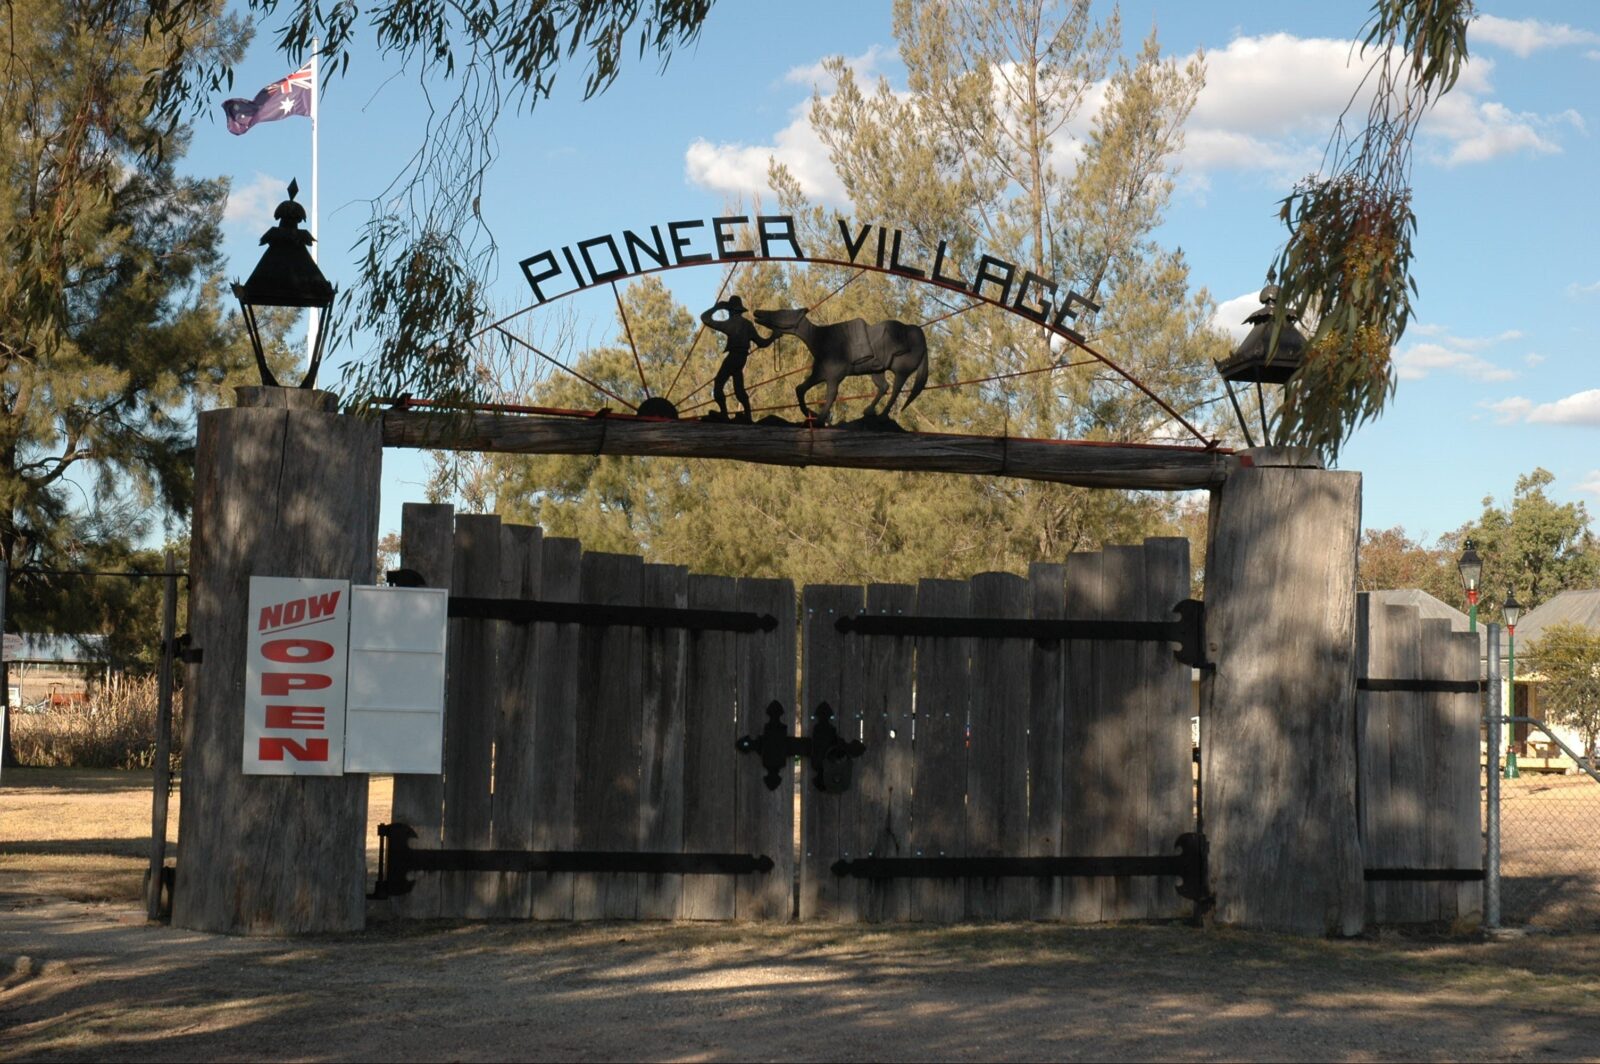 Wooden front gates of Pioneer Village